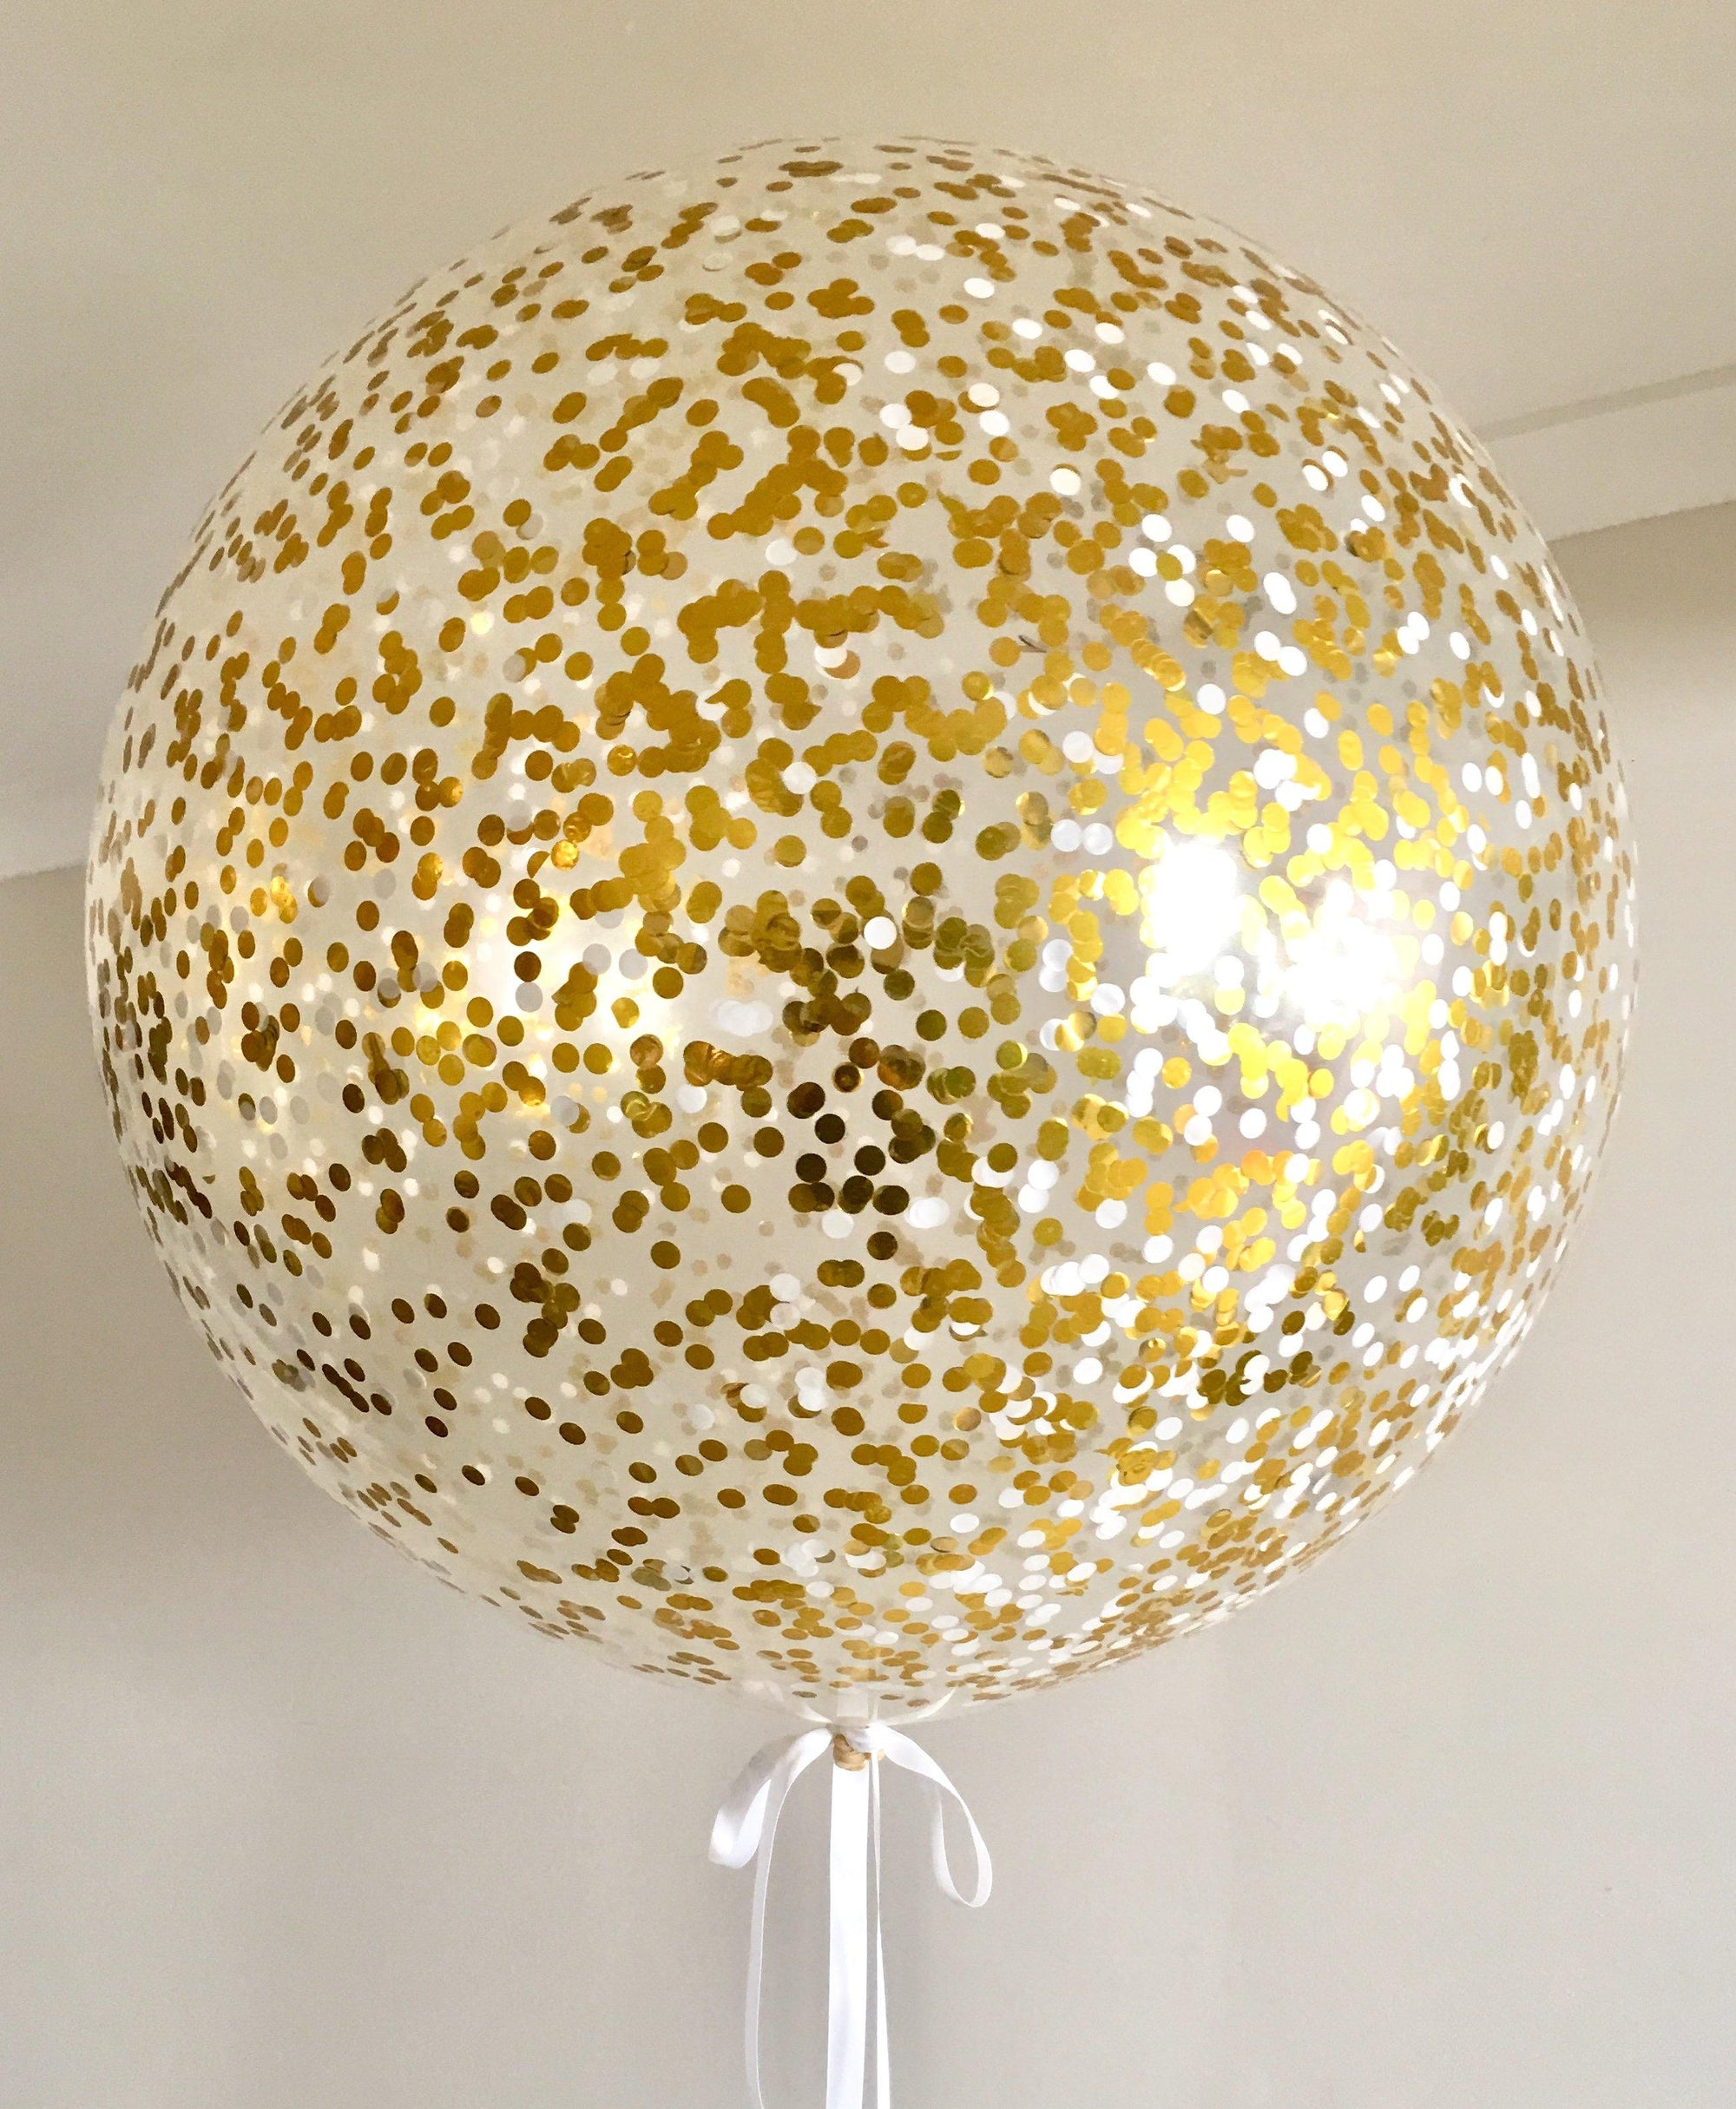 Jumbo Helium Filled  Confetti Balloon with small metallic gold & white confetti - Bickiboo Designs